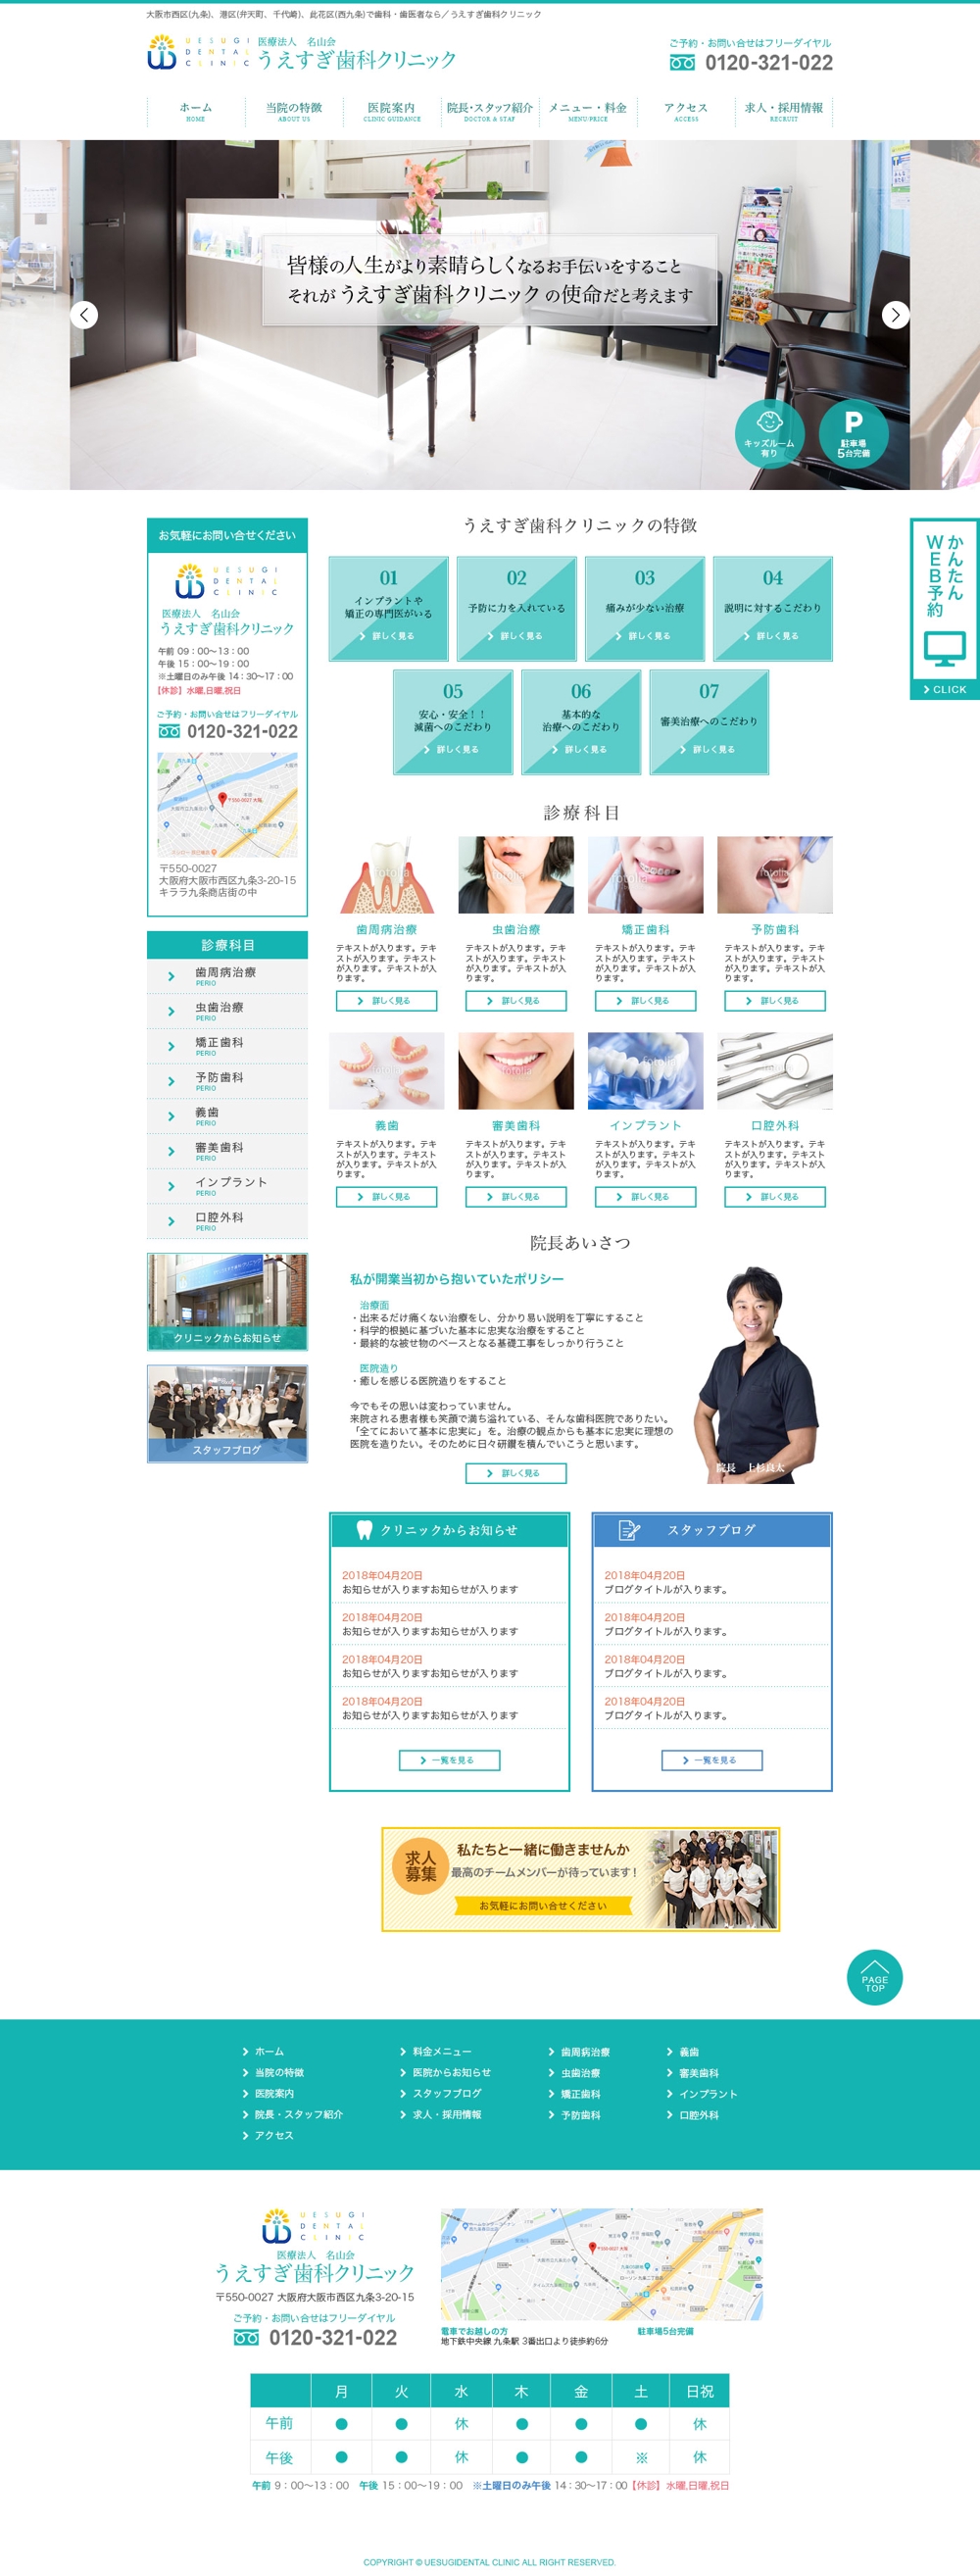 【TOPラフ1枚】歯科医院オフィシャルサイトのリニューアル